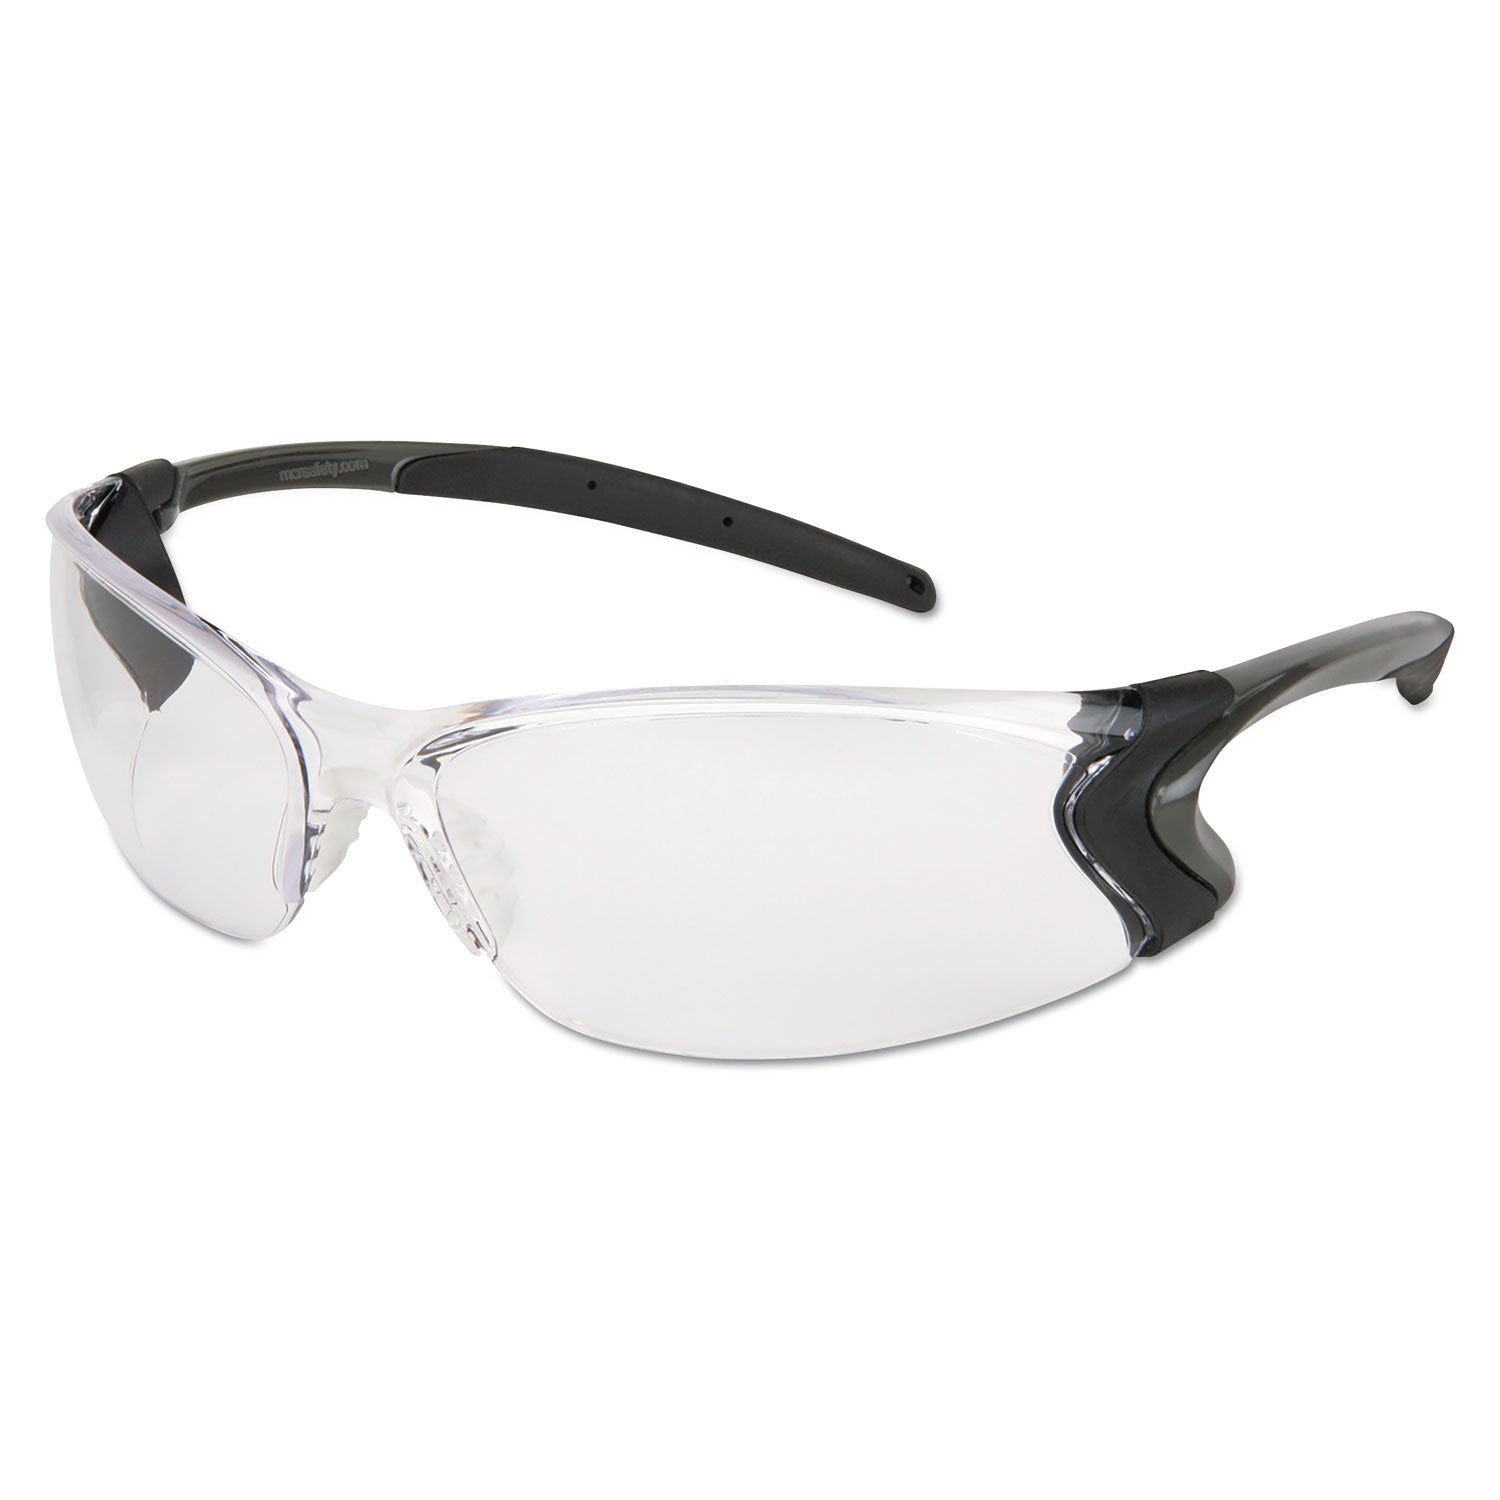 backdraft-glasses-clear-frame-anti-fog-clear-lens_crwbd110pf - 1